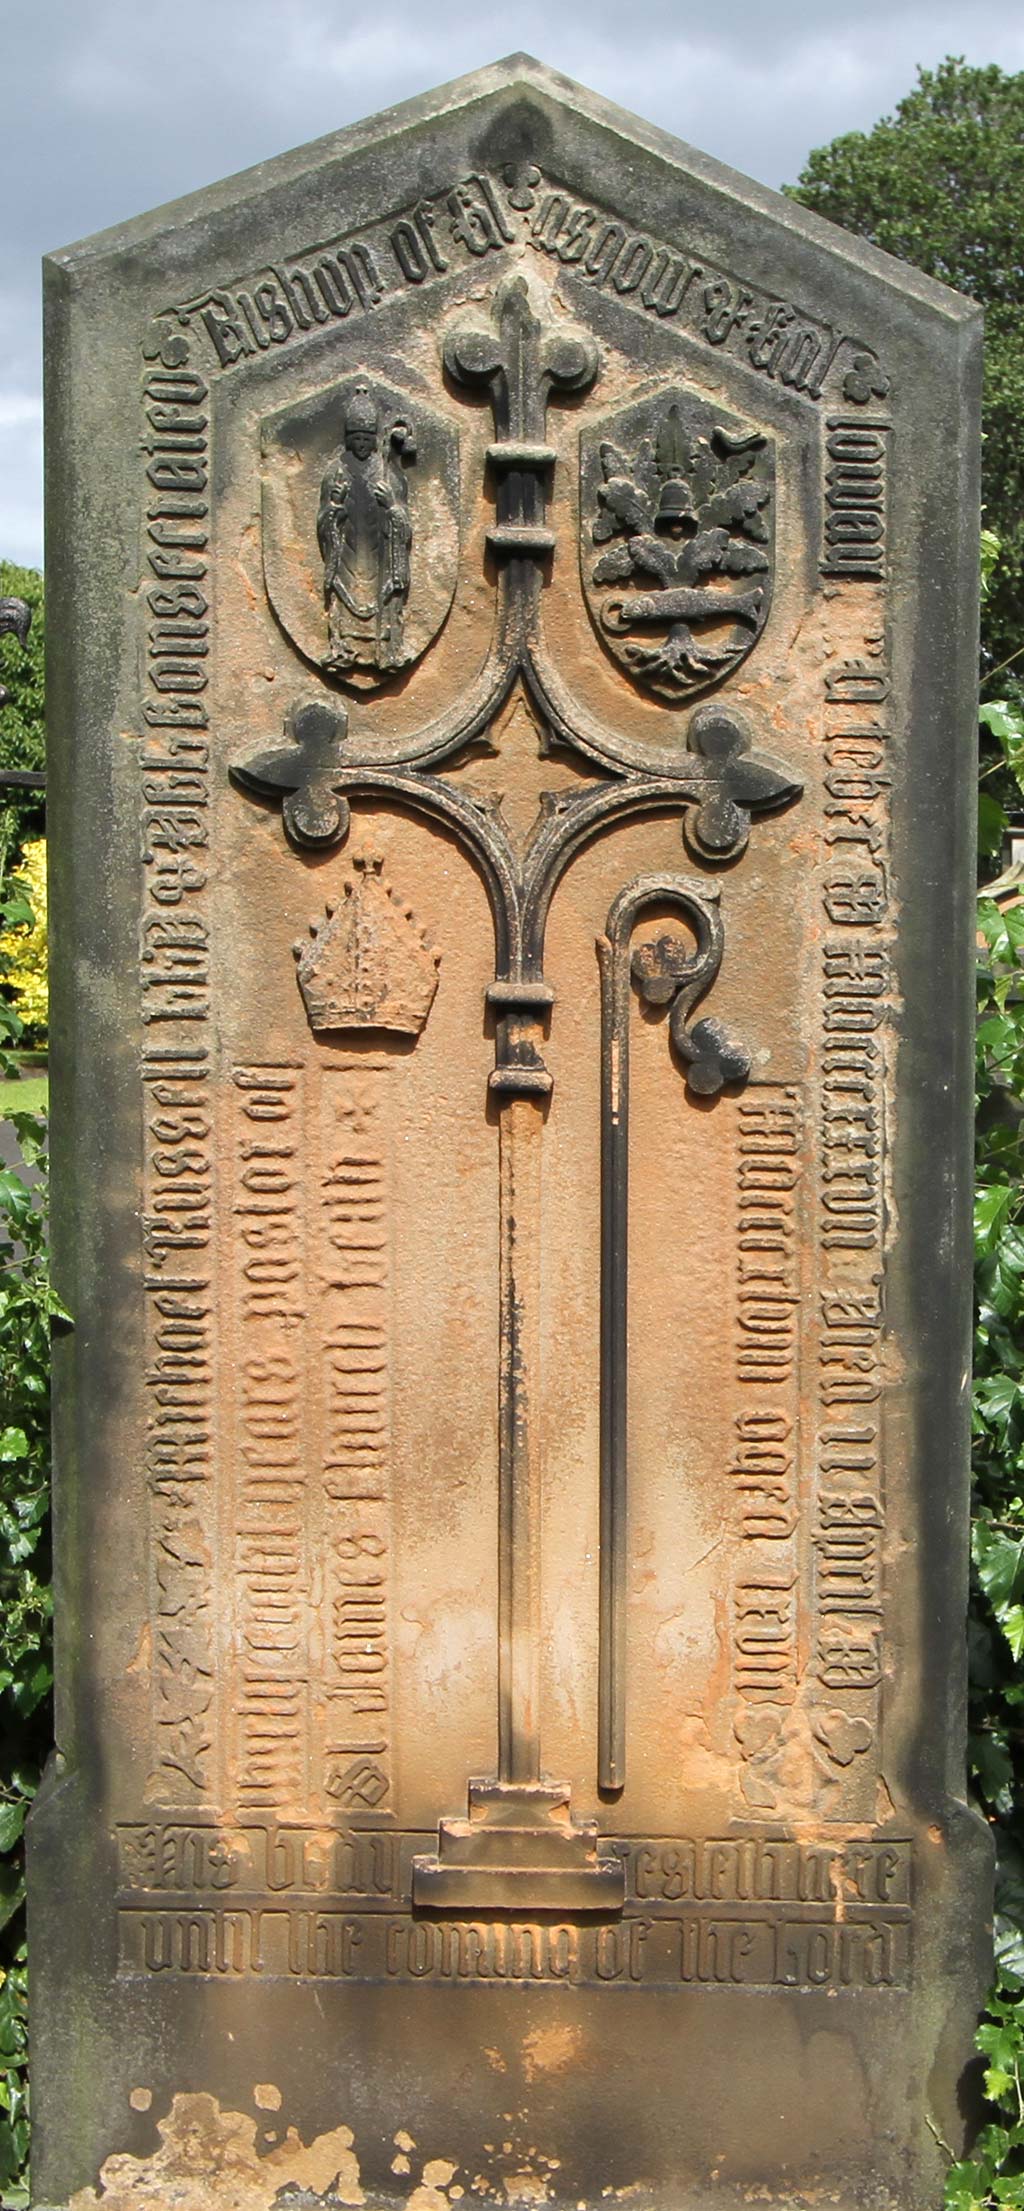 Zoom-in on gravestone at St Margaret's Church, Restalrig